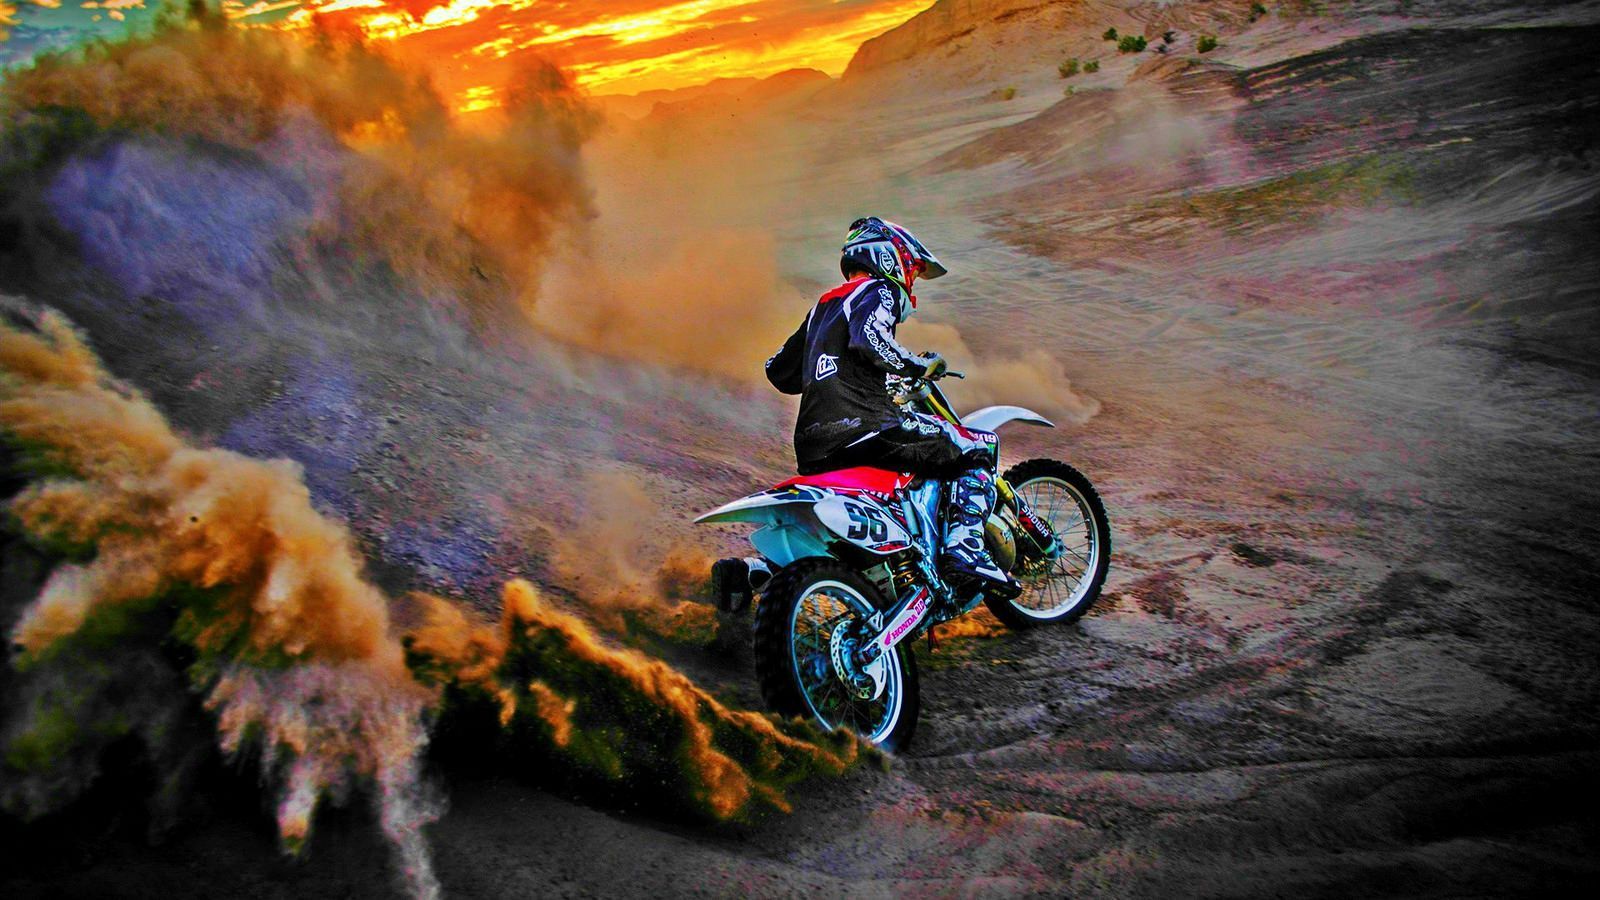 HD Freestyle Motocross Wallpaper For Desktop. Cool Dirt Bikes, Freestyle Motocross, Motorcycle Wallpaper